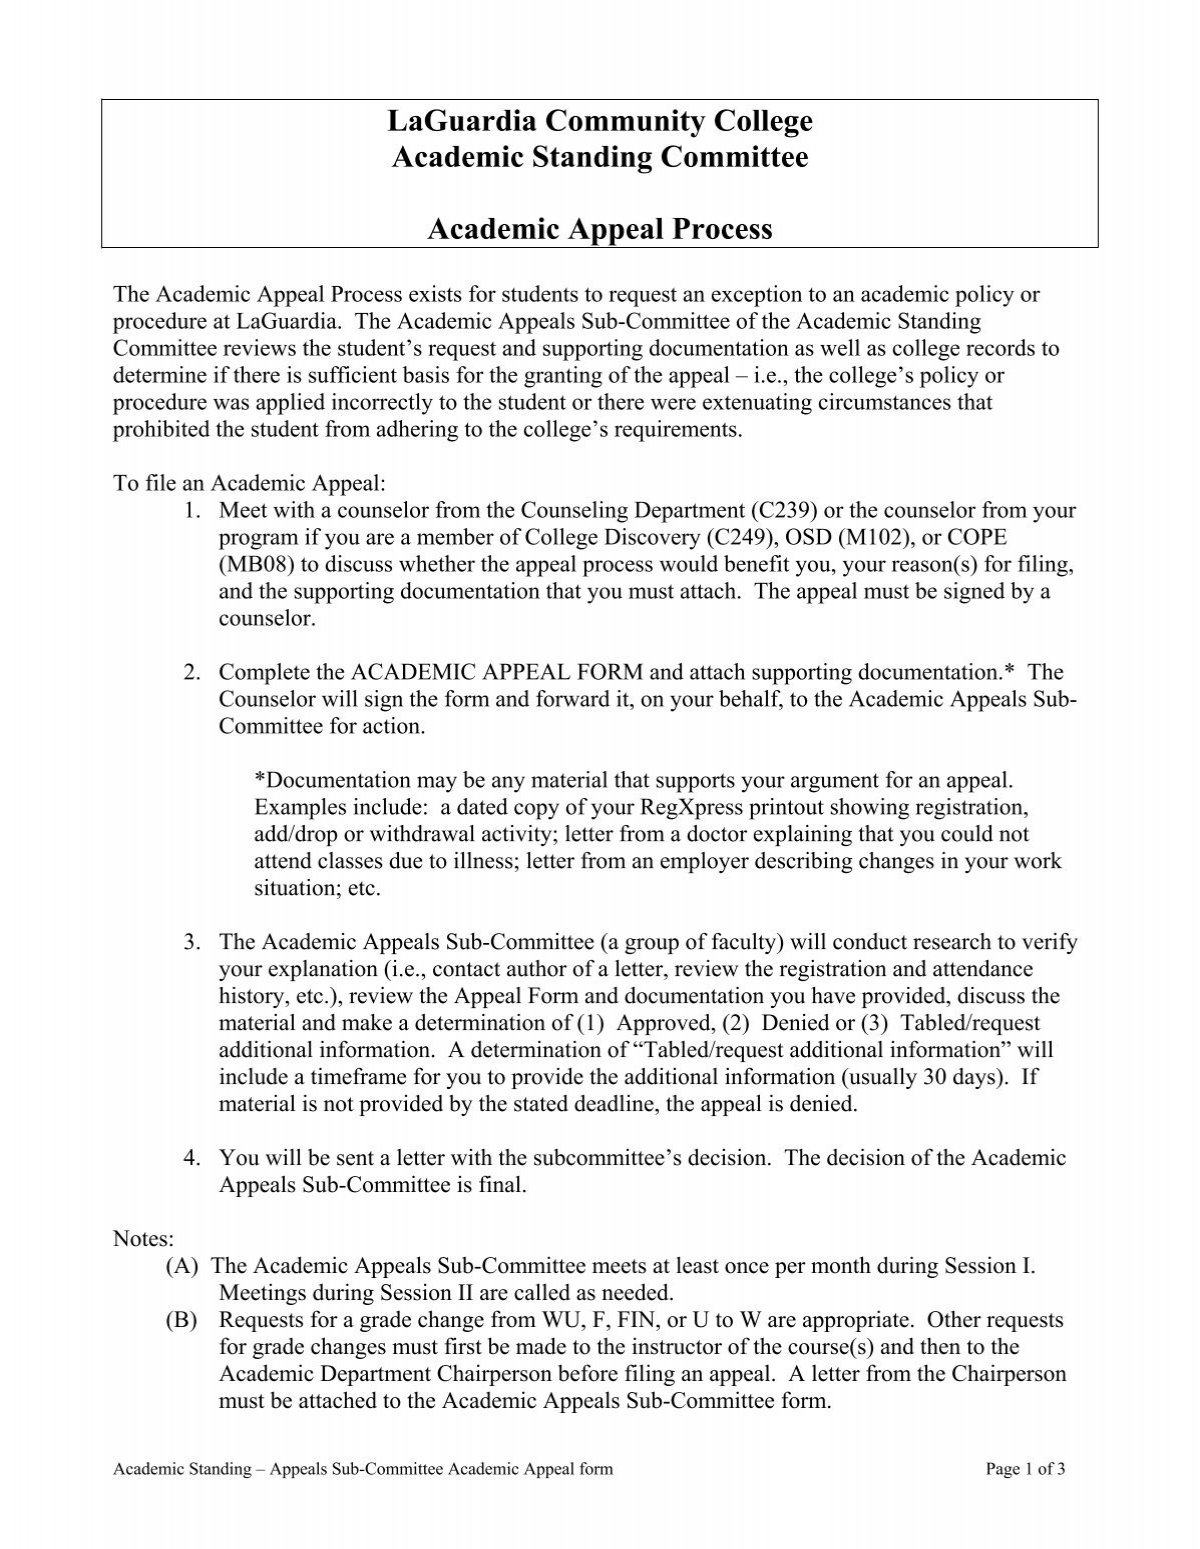 academic-appeal-form-laguardia-community-college